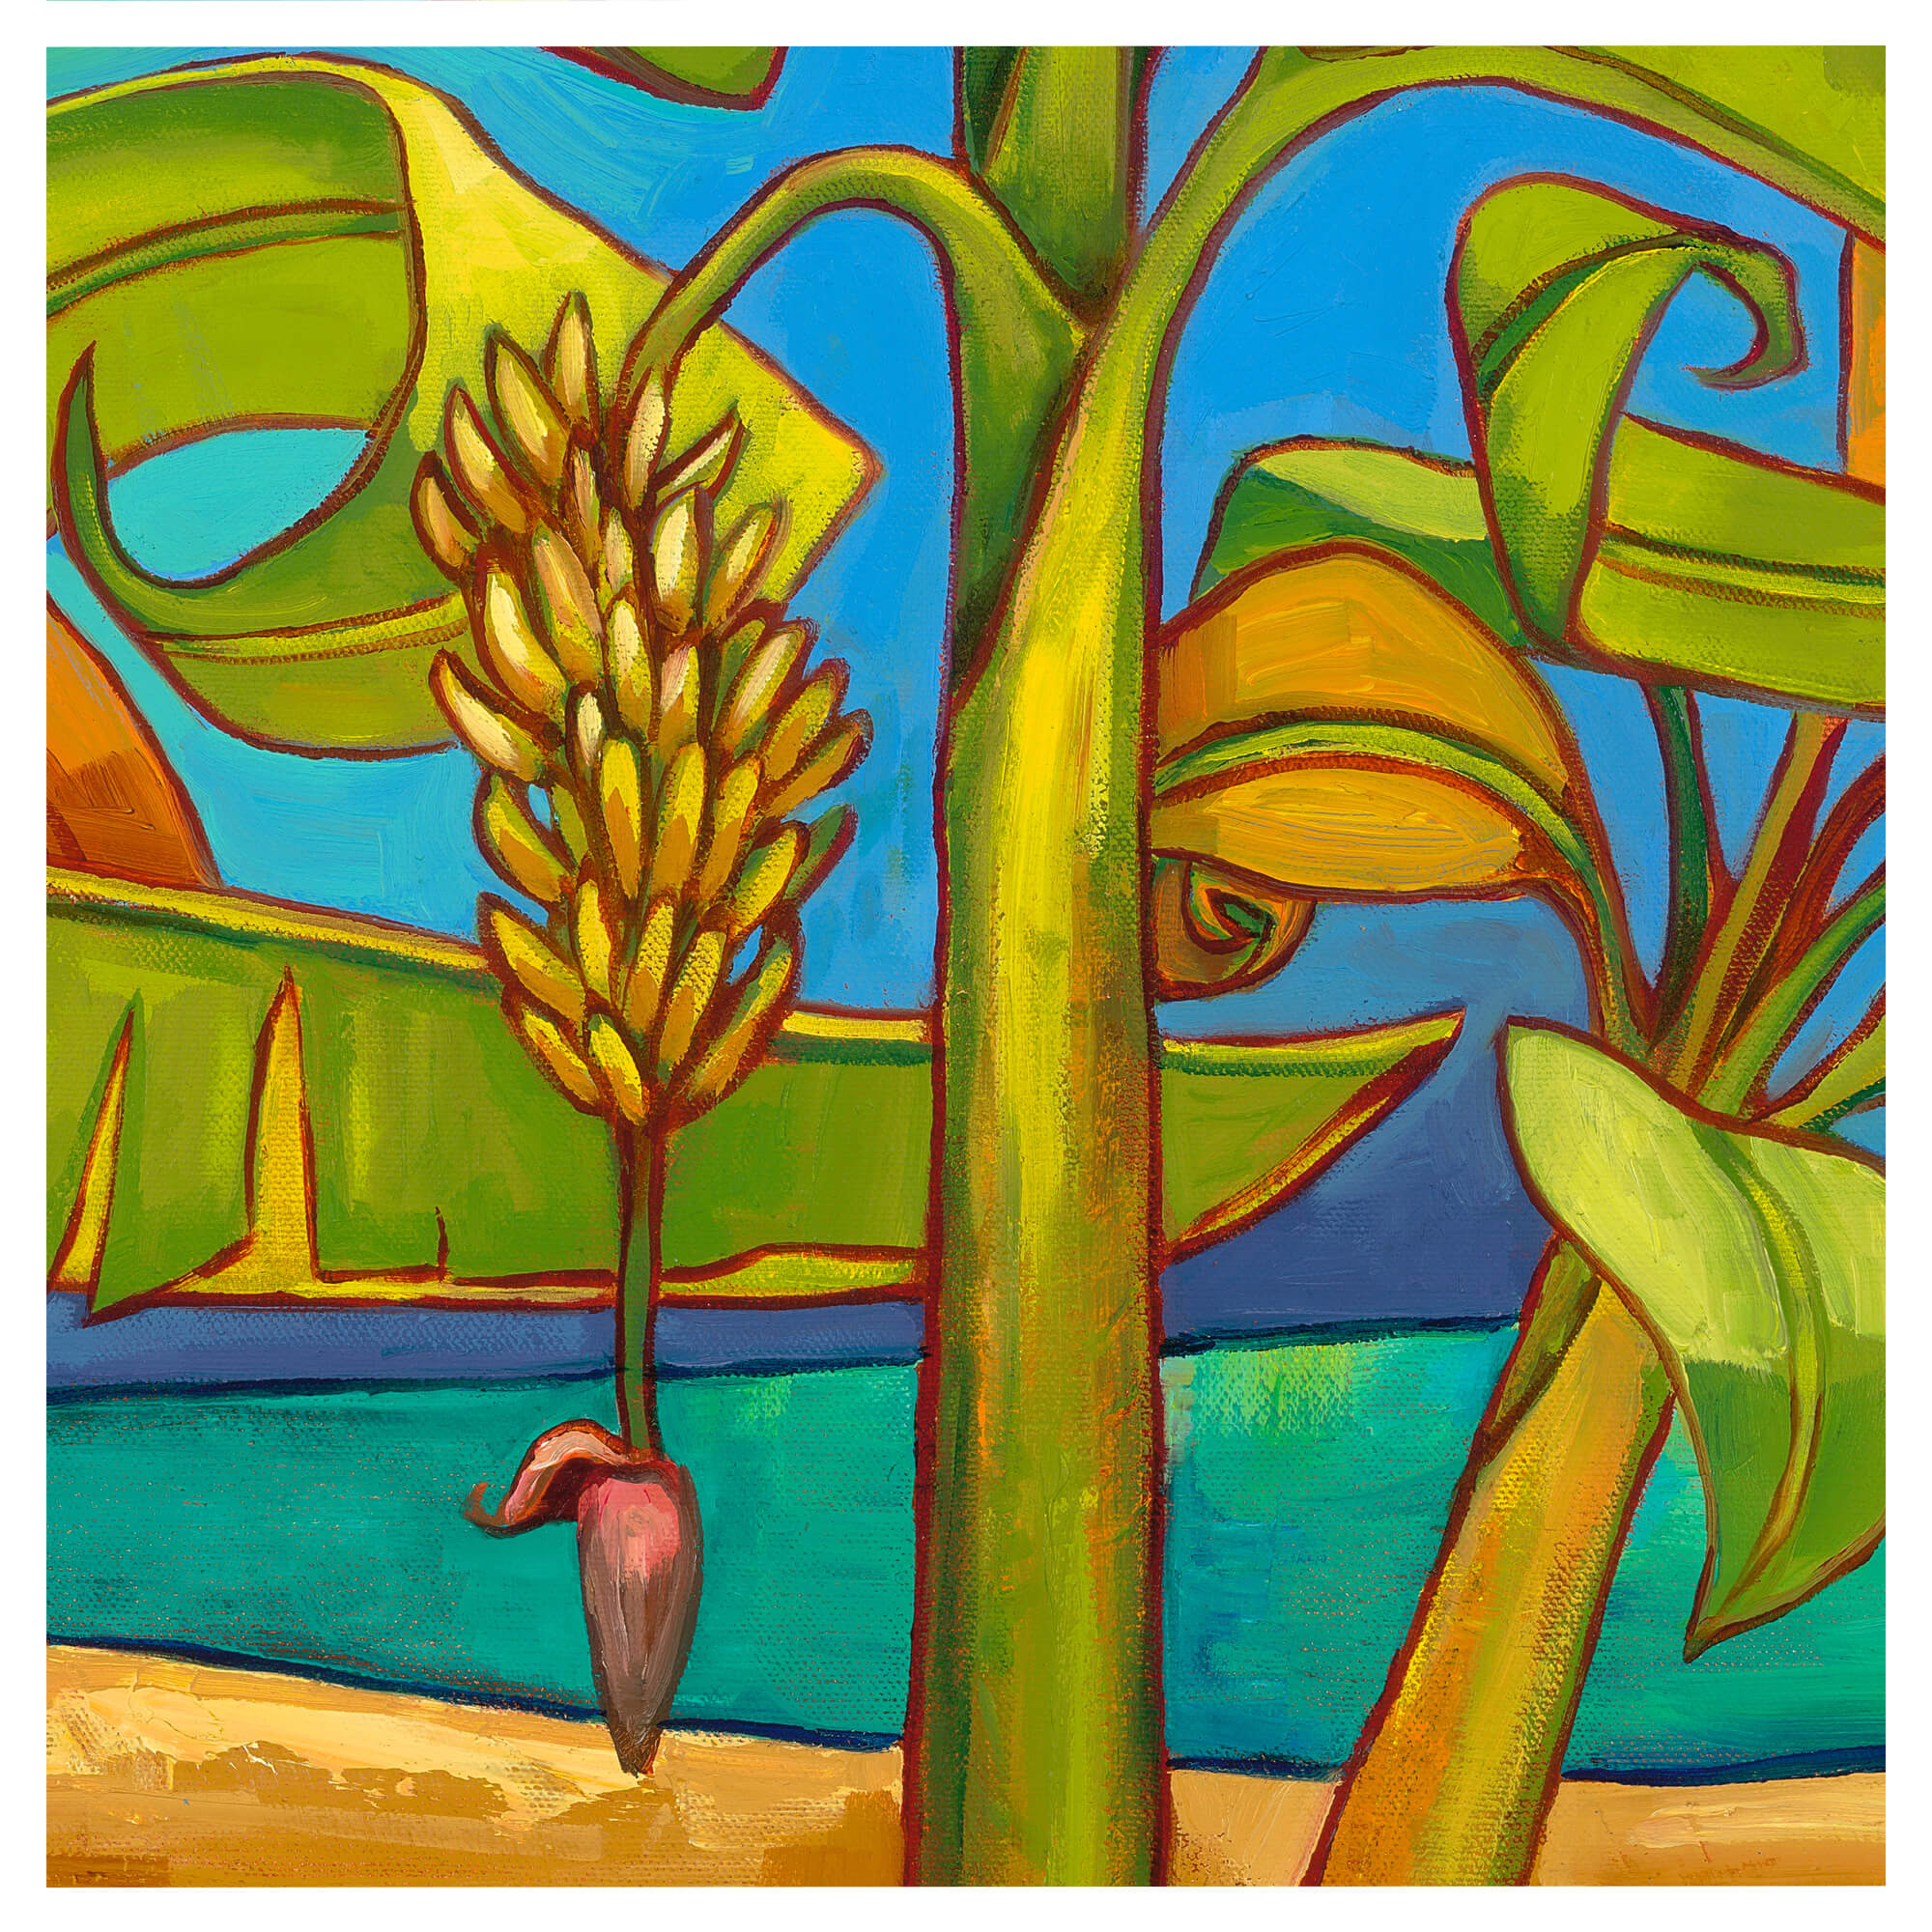 Banana fruit and teal hued ocean water by Hawaii artist Colin Redican